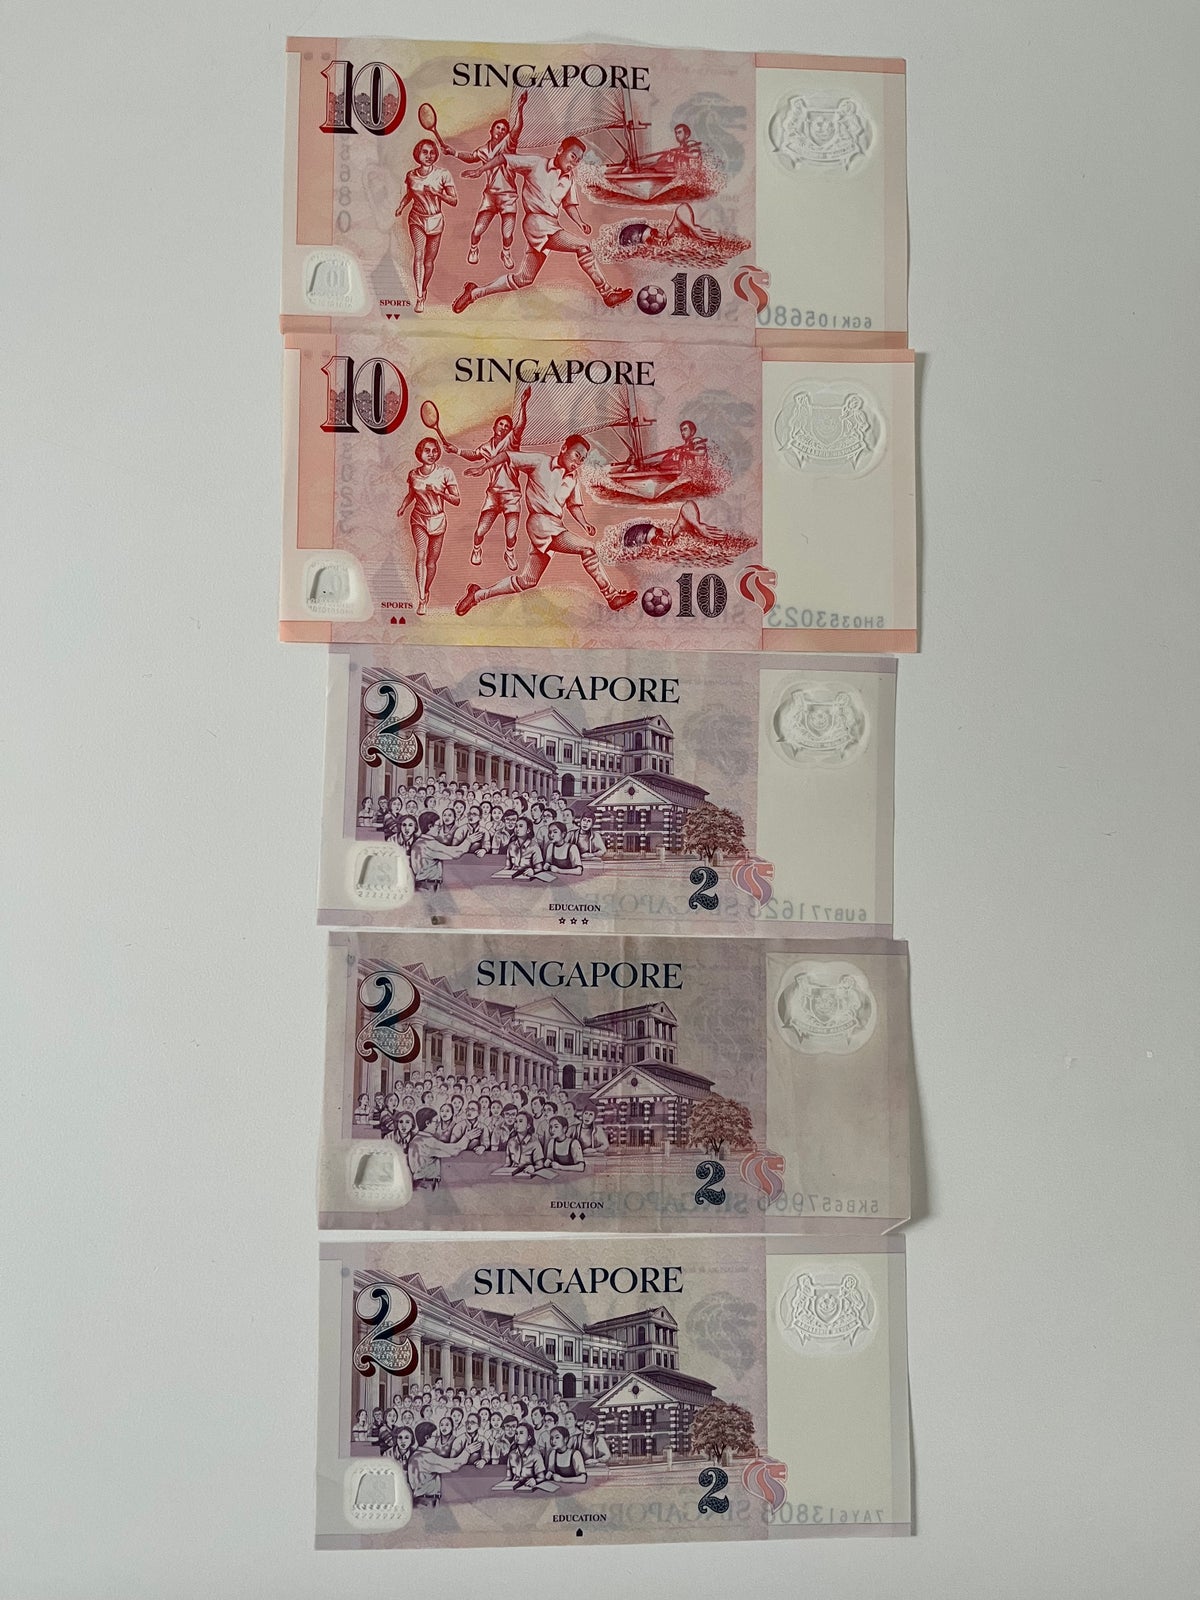 Andet land, sedler, 26 Singapore $